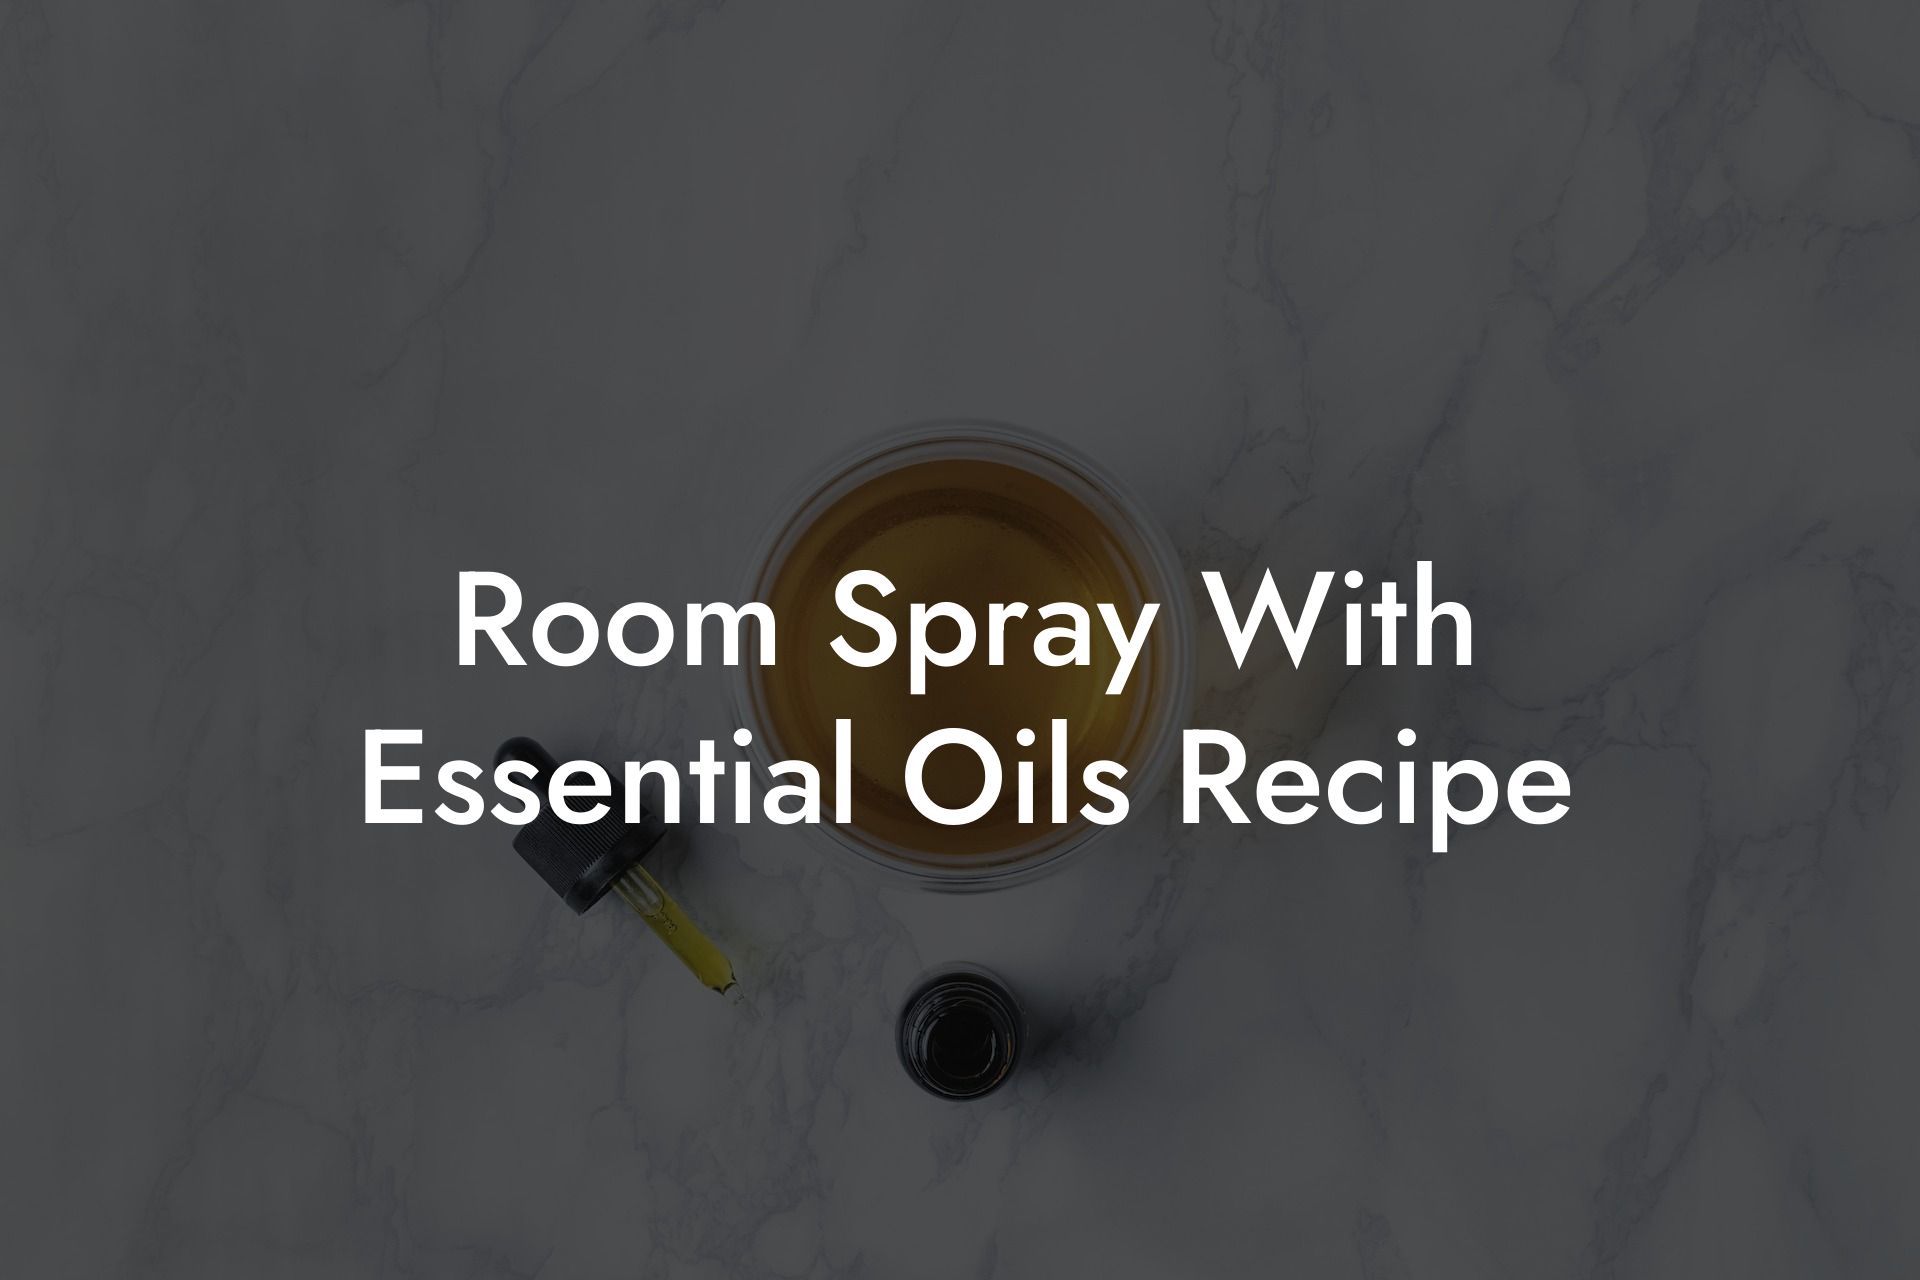 Room Spray With Essential Oils Recipe